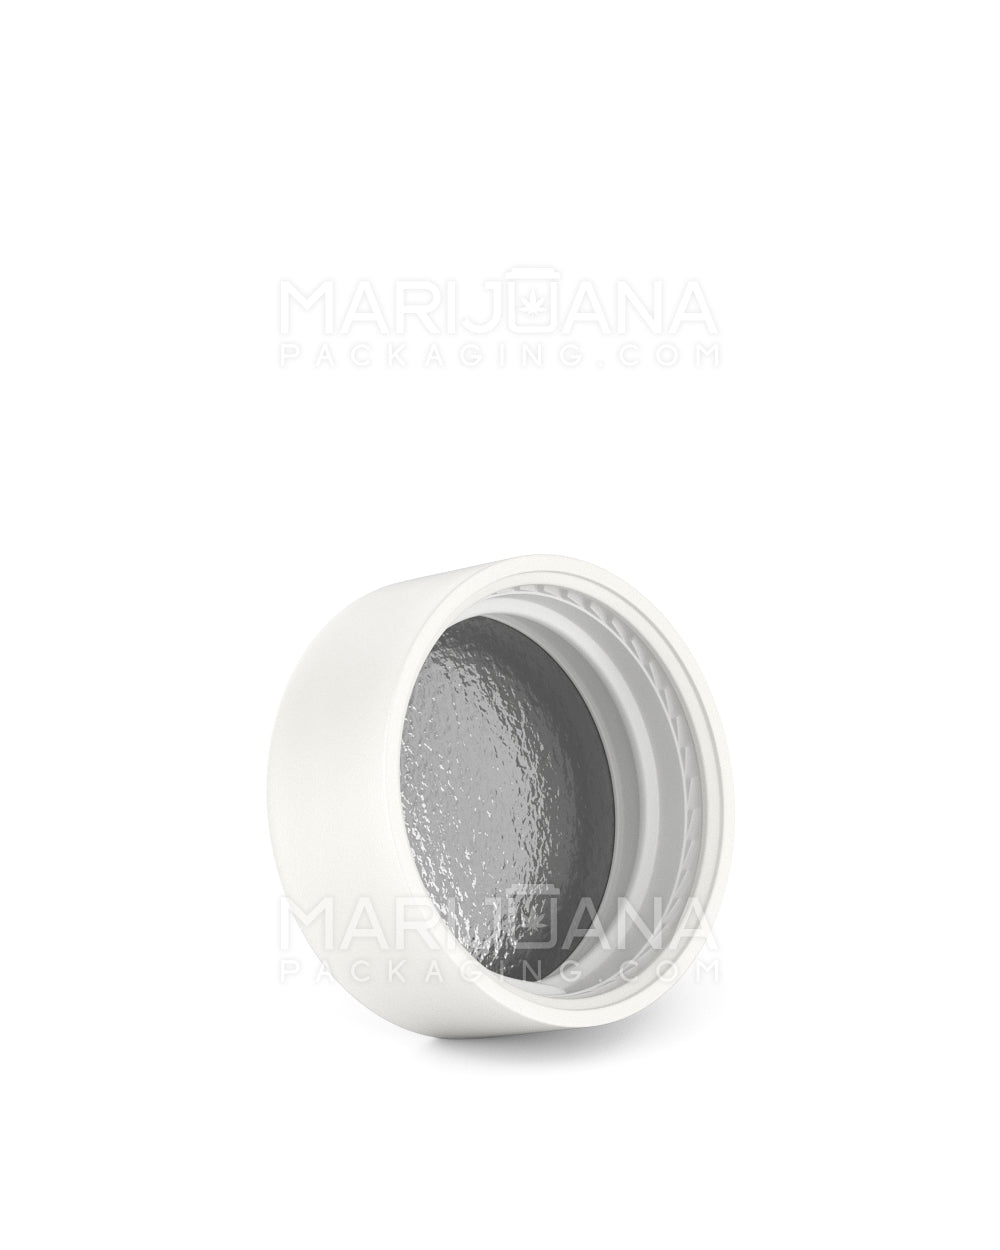 POLLEN GEAR | HiLine Child Resistant Smooth Push Down & Turn Plastic Flat Caps w/ Foil Liner | 45mm - Matte White - 308 Count - 2